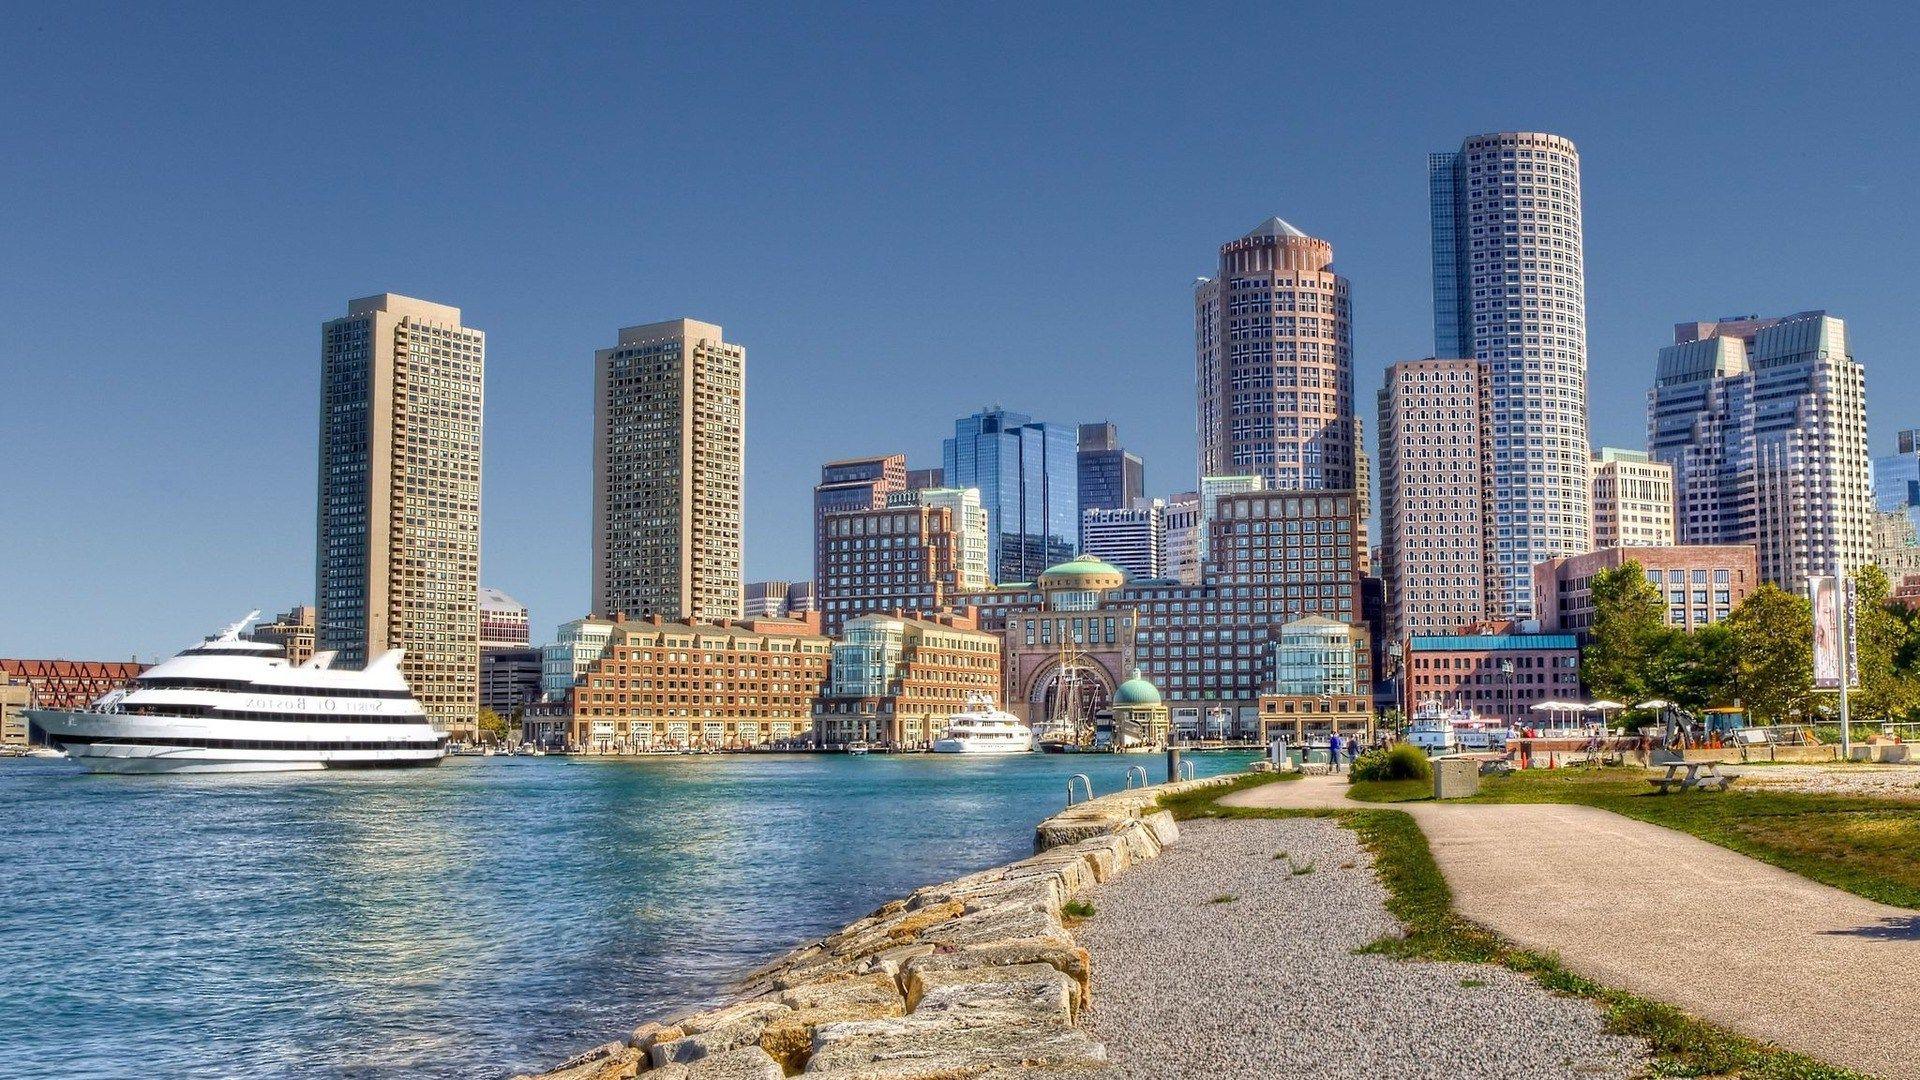 Free screensaver wallpapers for boston